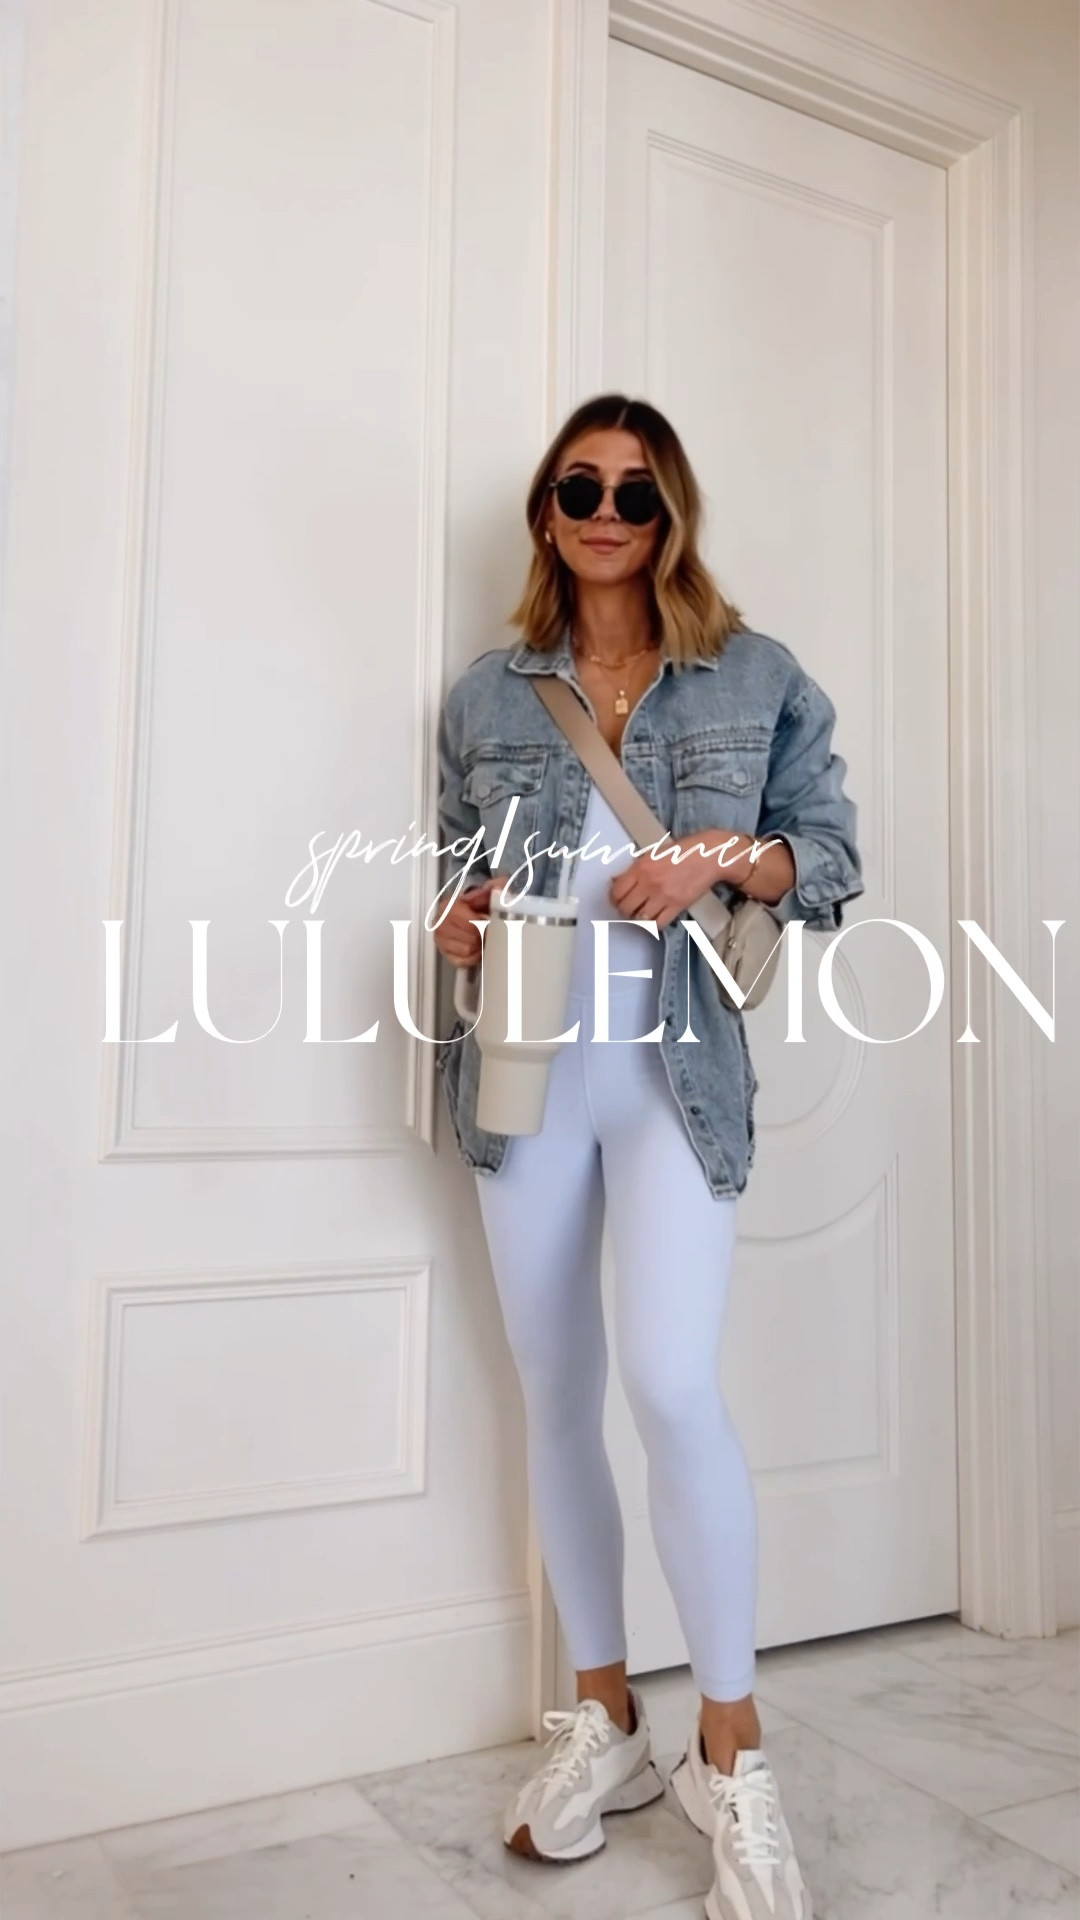 lululemon Align™ Bodysuit 25 … curated on LTK